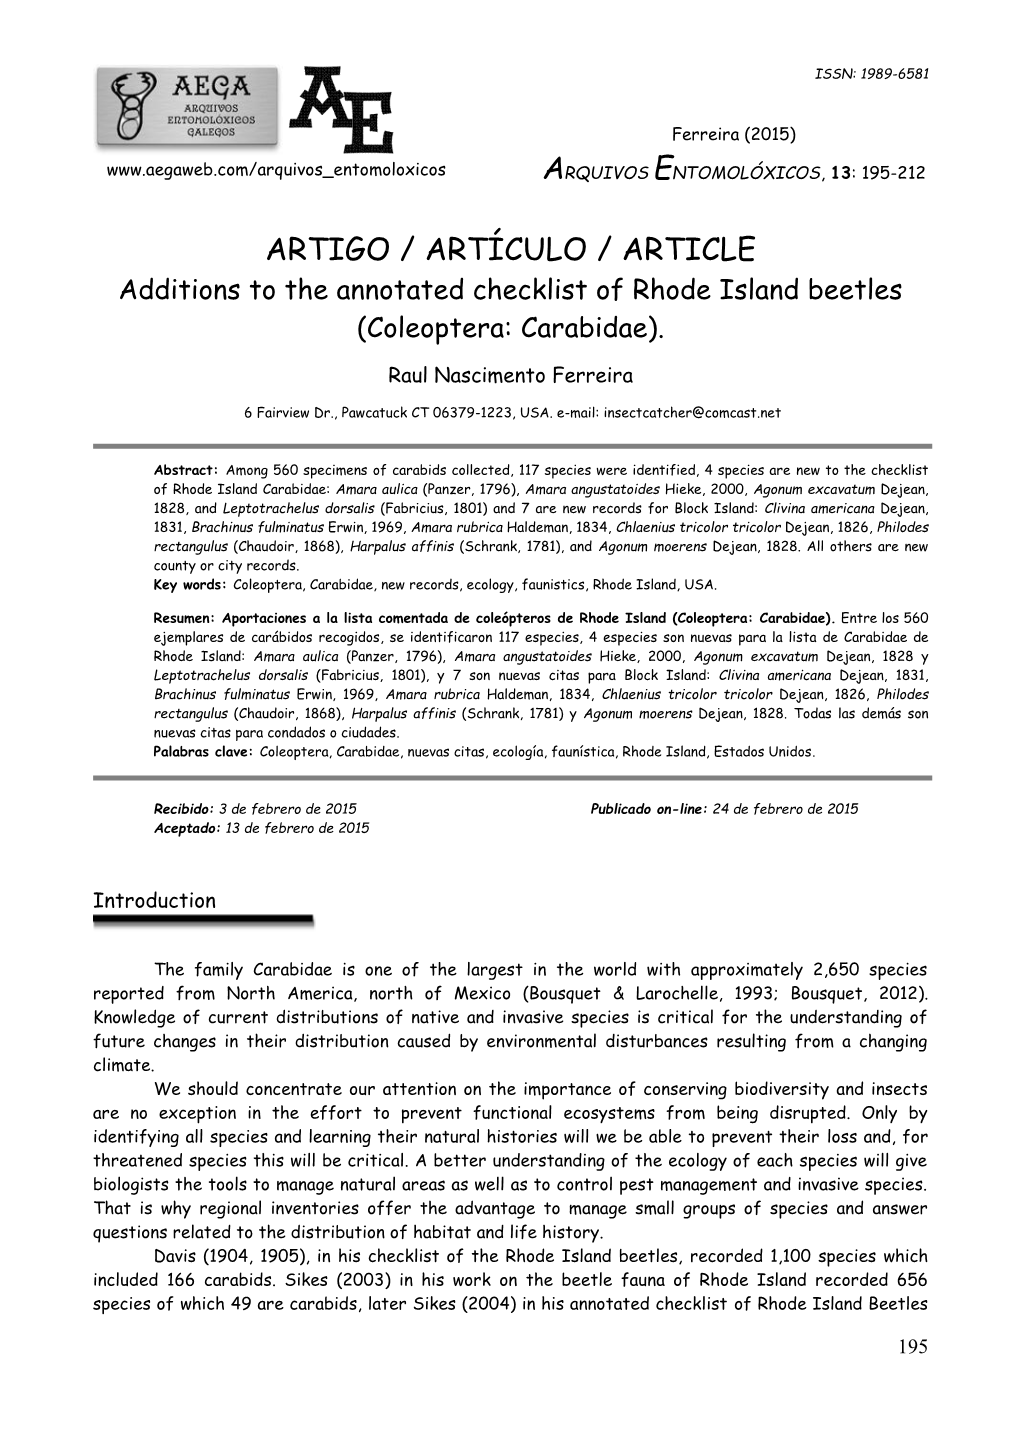 ARTIGO / ARTÍCULO / ARTICLE Additions to the Annotated Checklist of Rhode Island Beetles (Coleoptera: Carabidae)